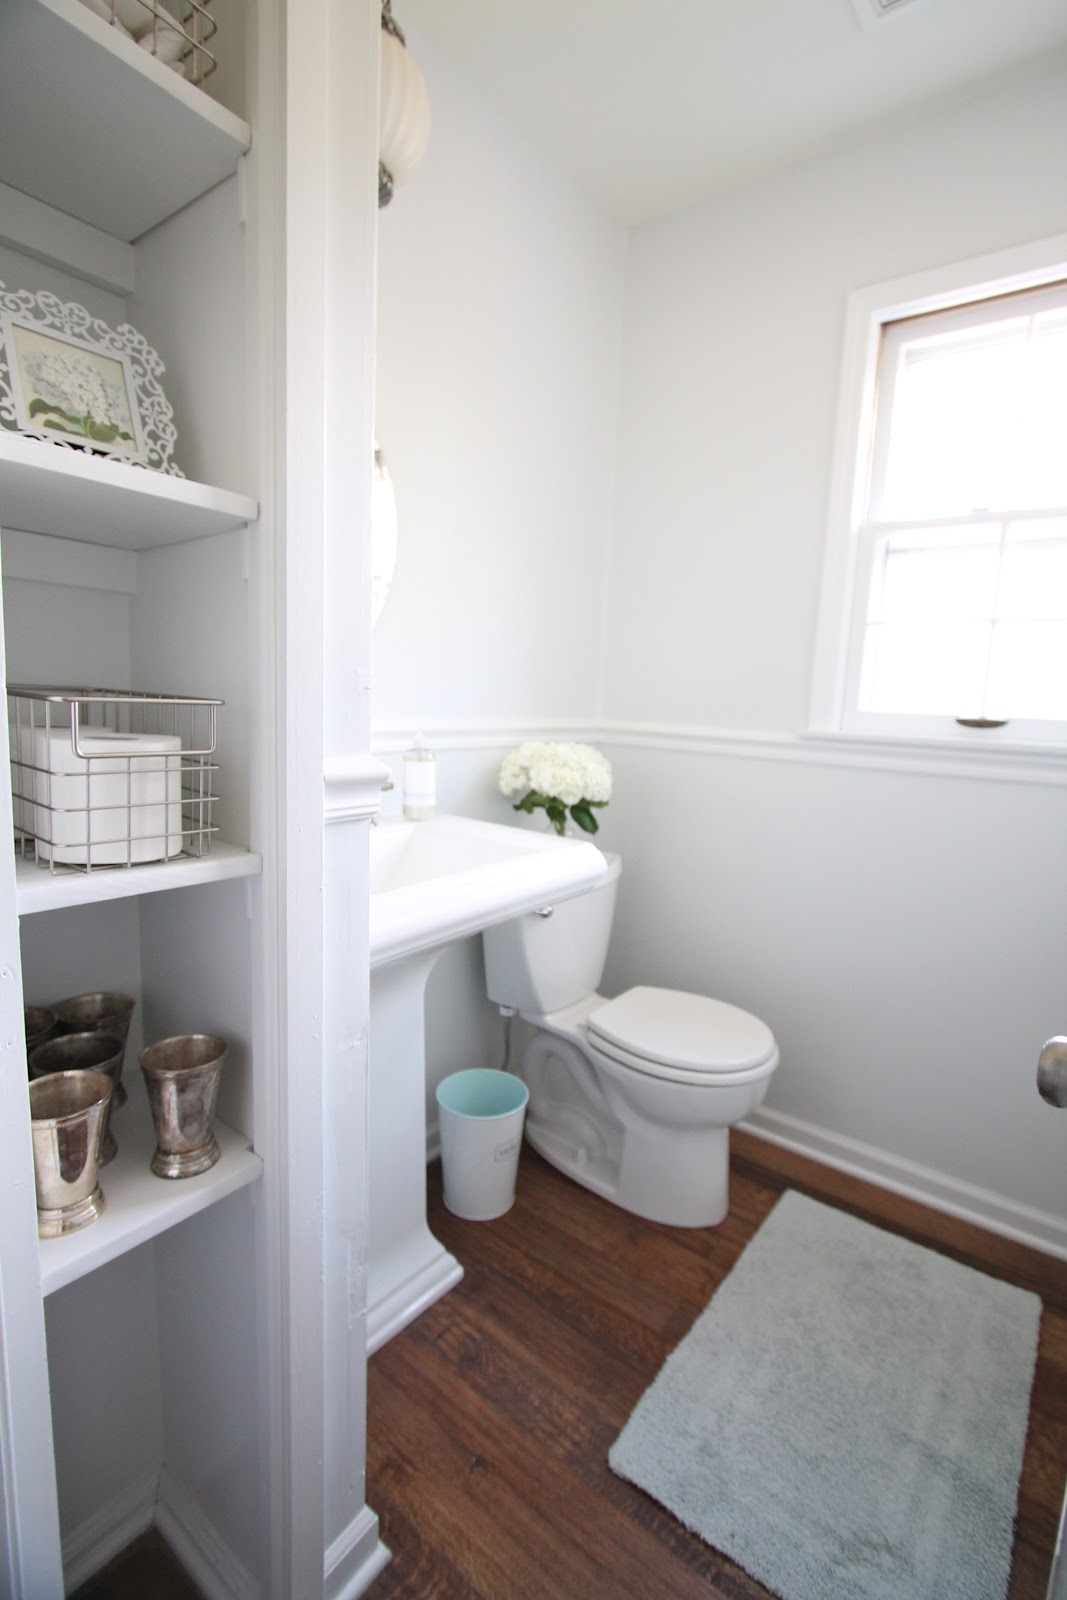 Best ideas about DIY Bathrooms Ideas
. Save or Pin DIY Bathroom Remodel Julie Blanner Now.